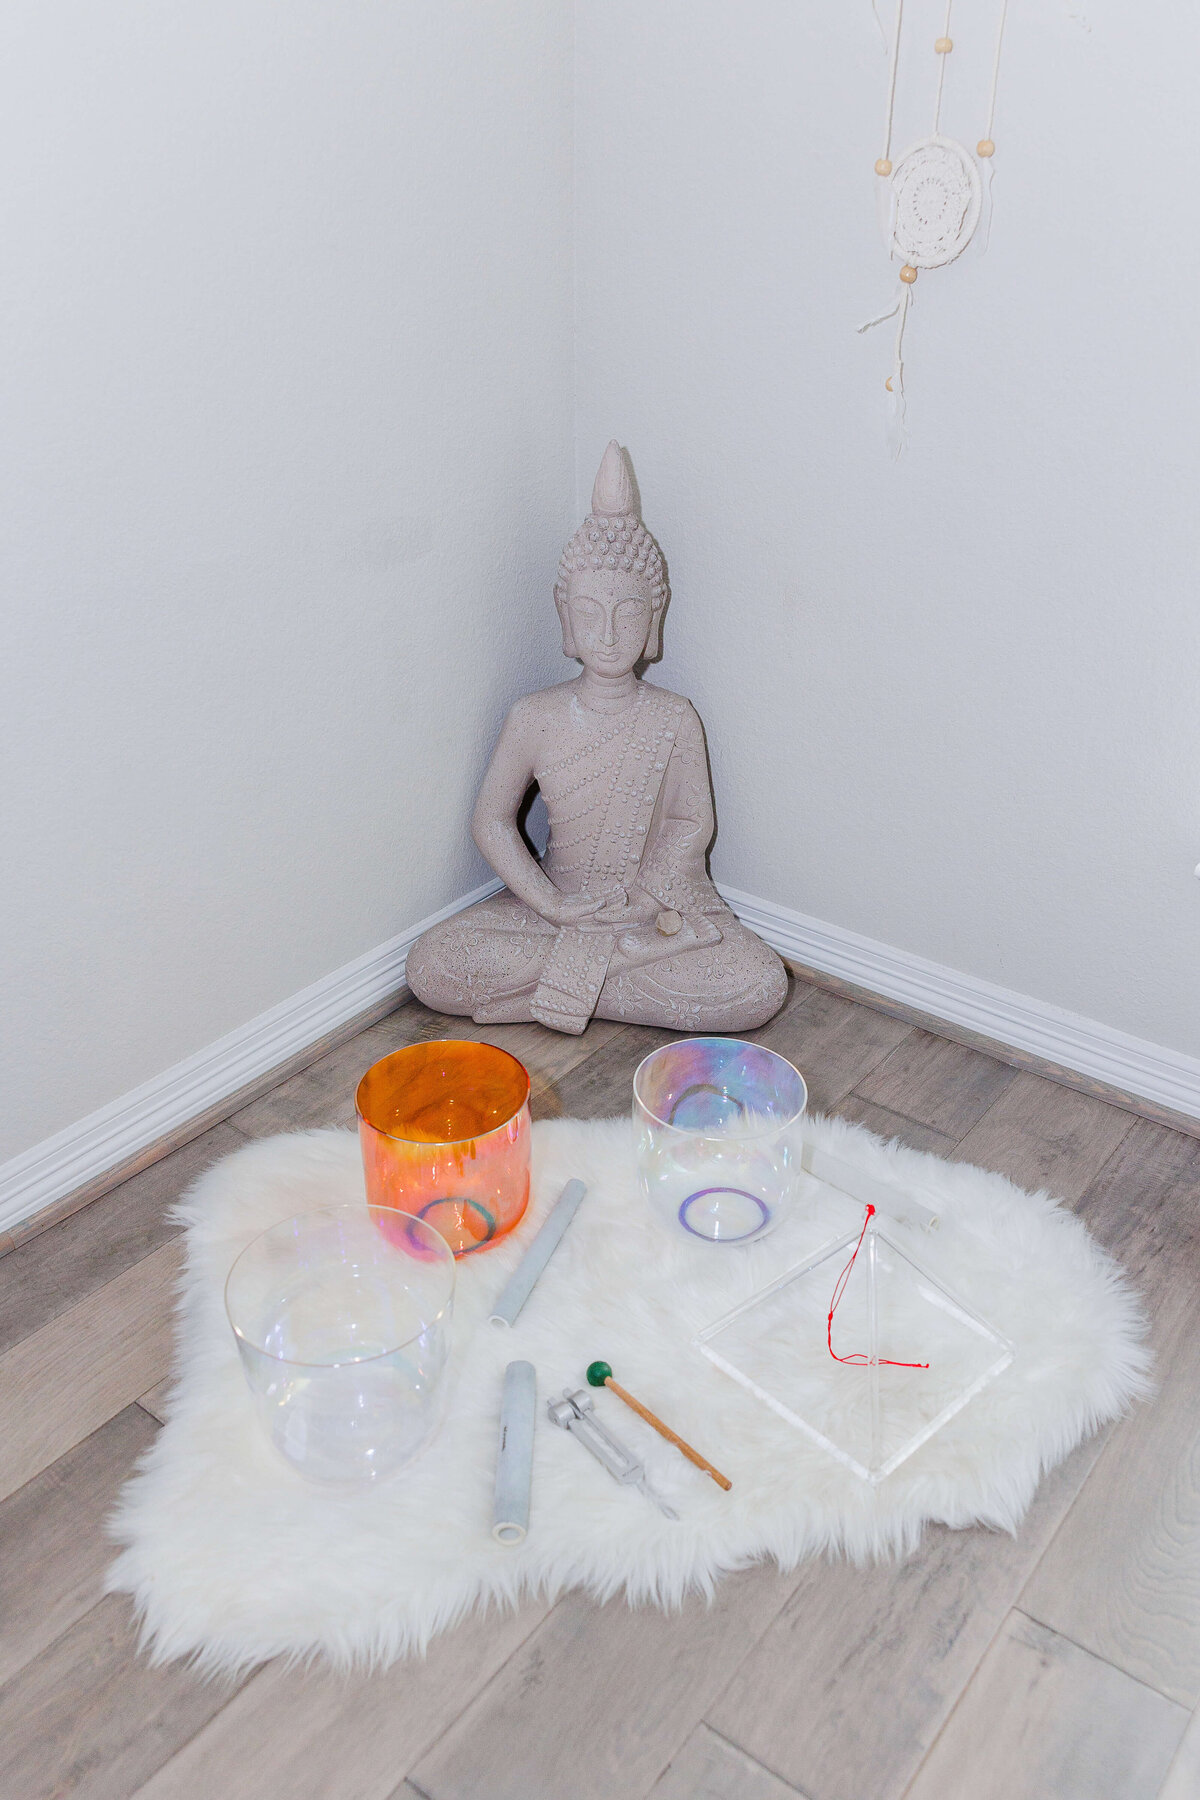 Budda and sound healing equipment